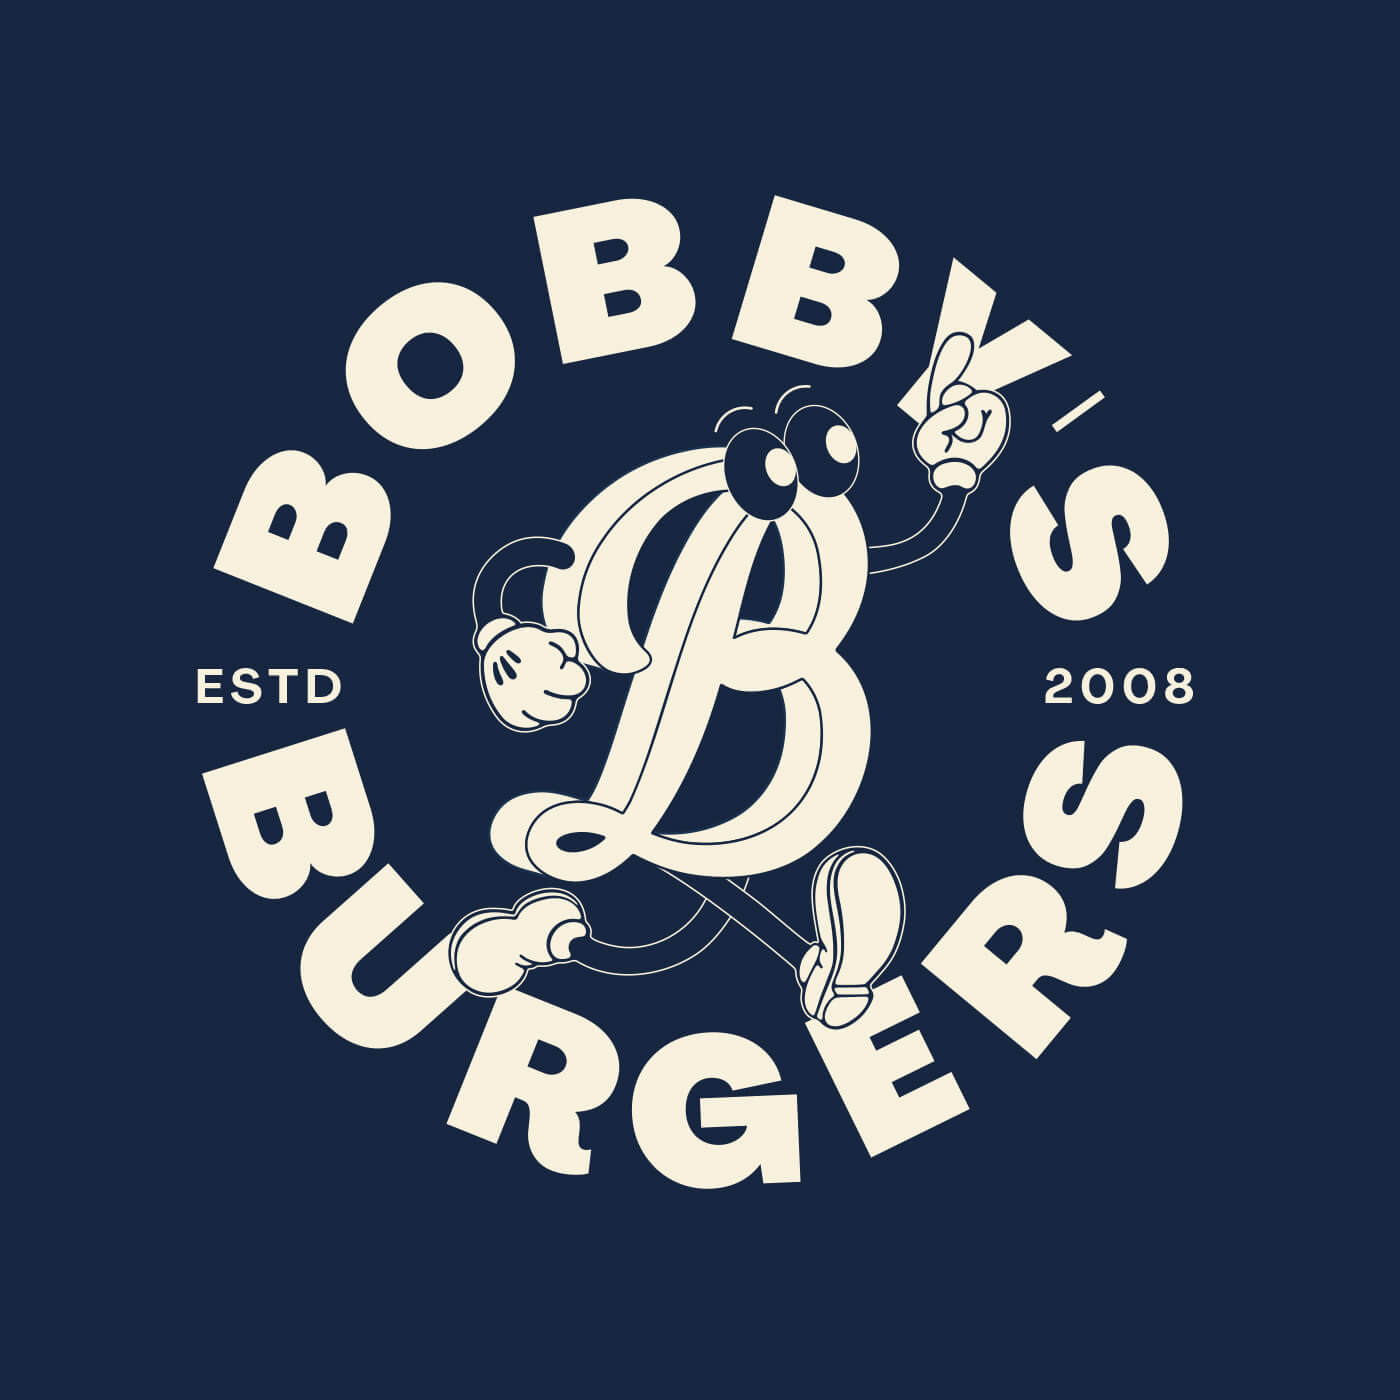 Bobby's Burgers